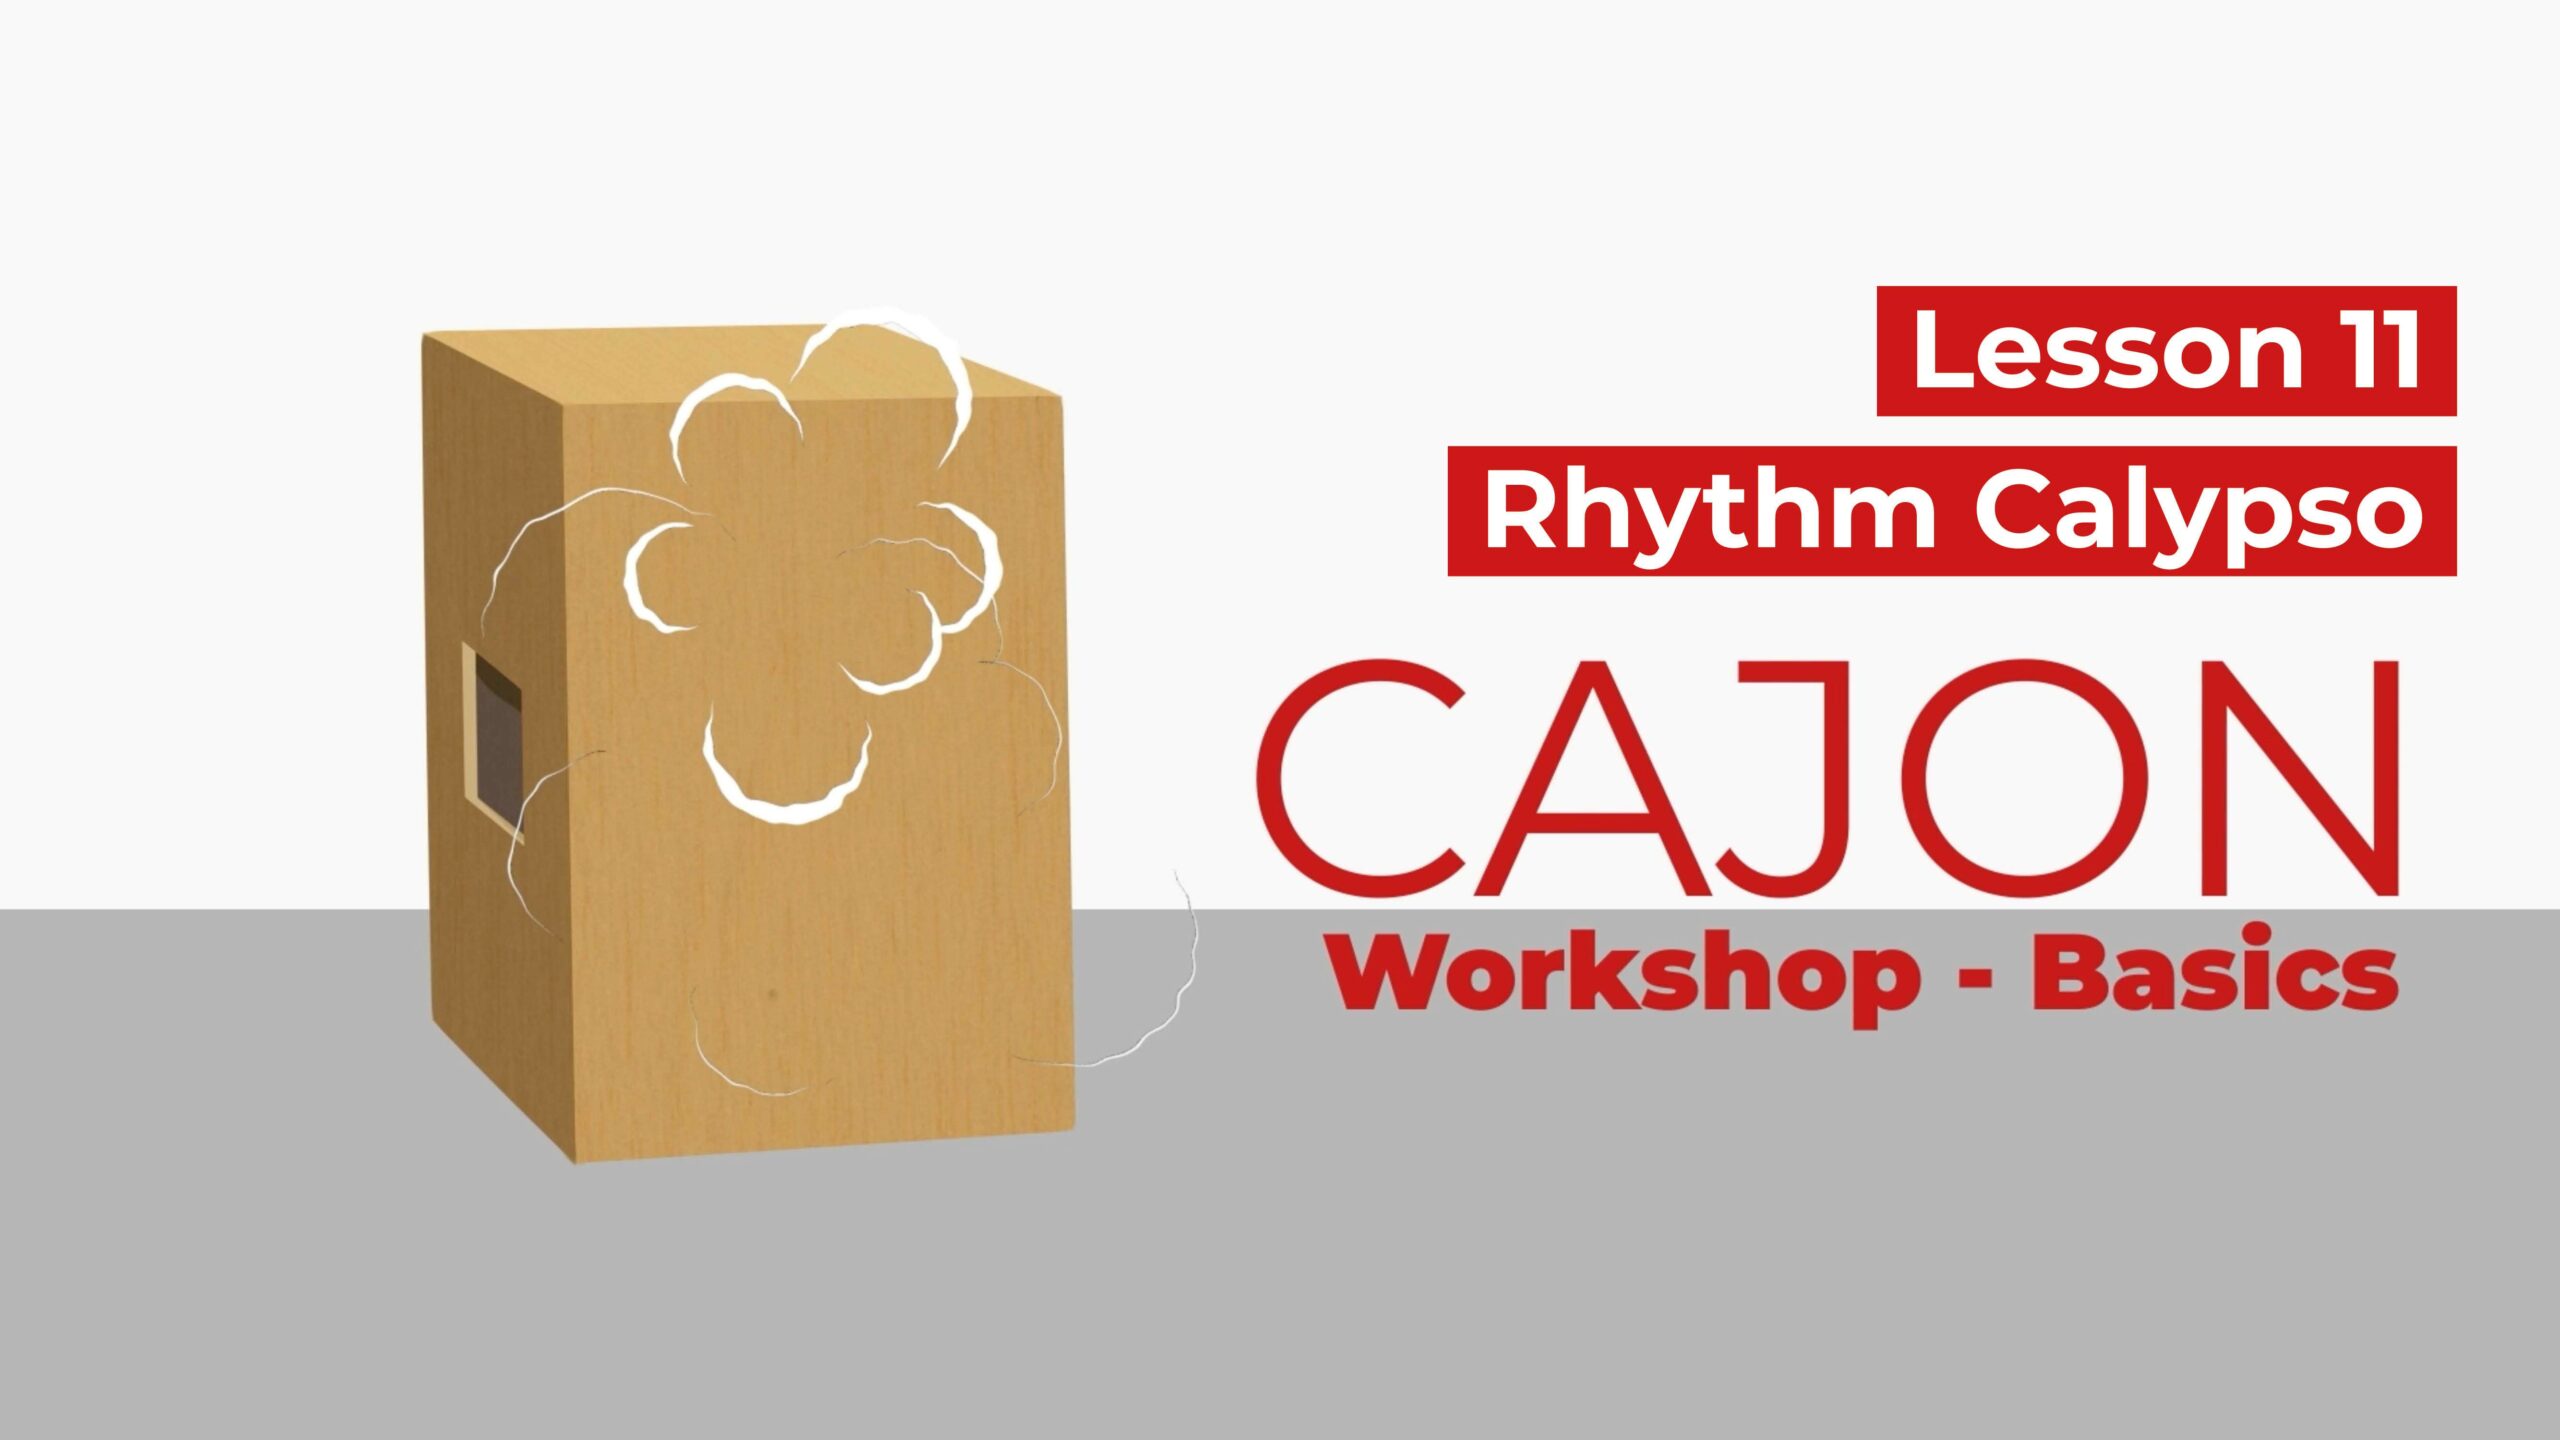 Lesson 11 - Rhythm Calypso